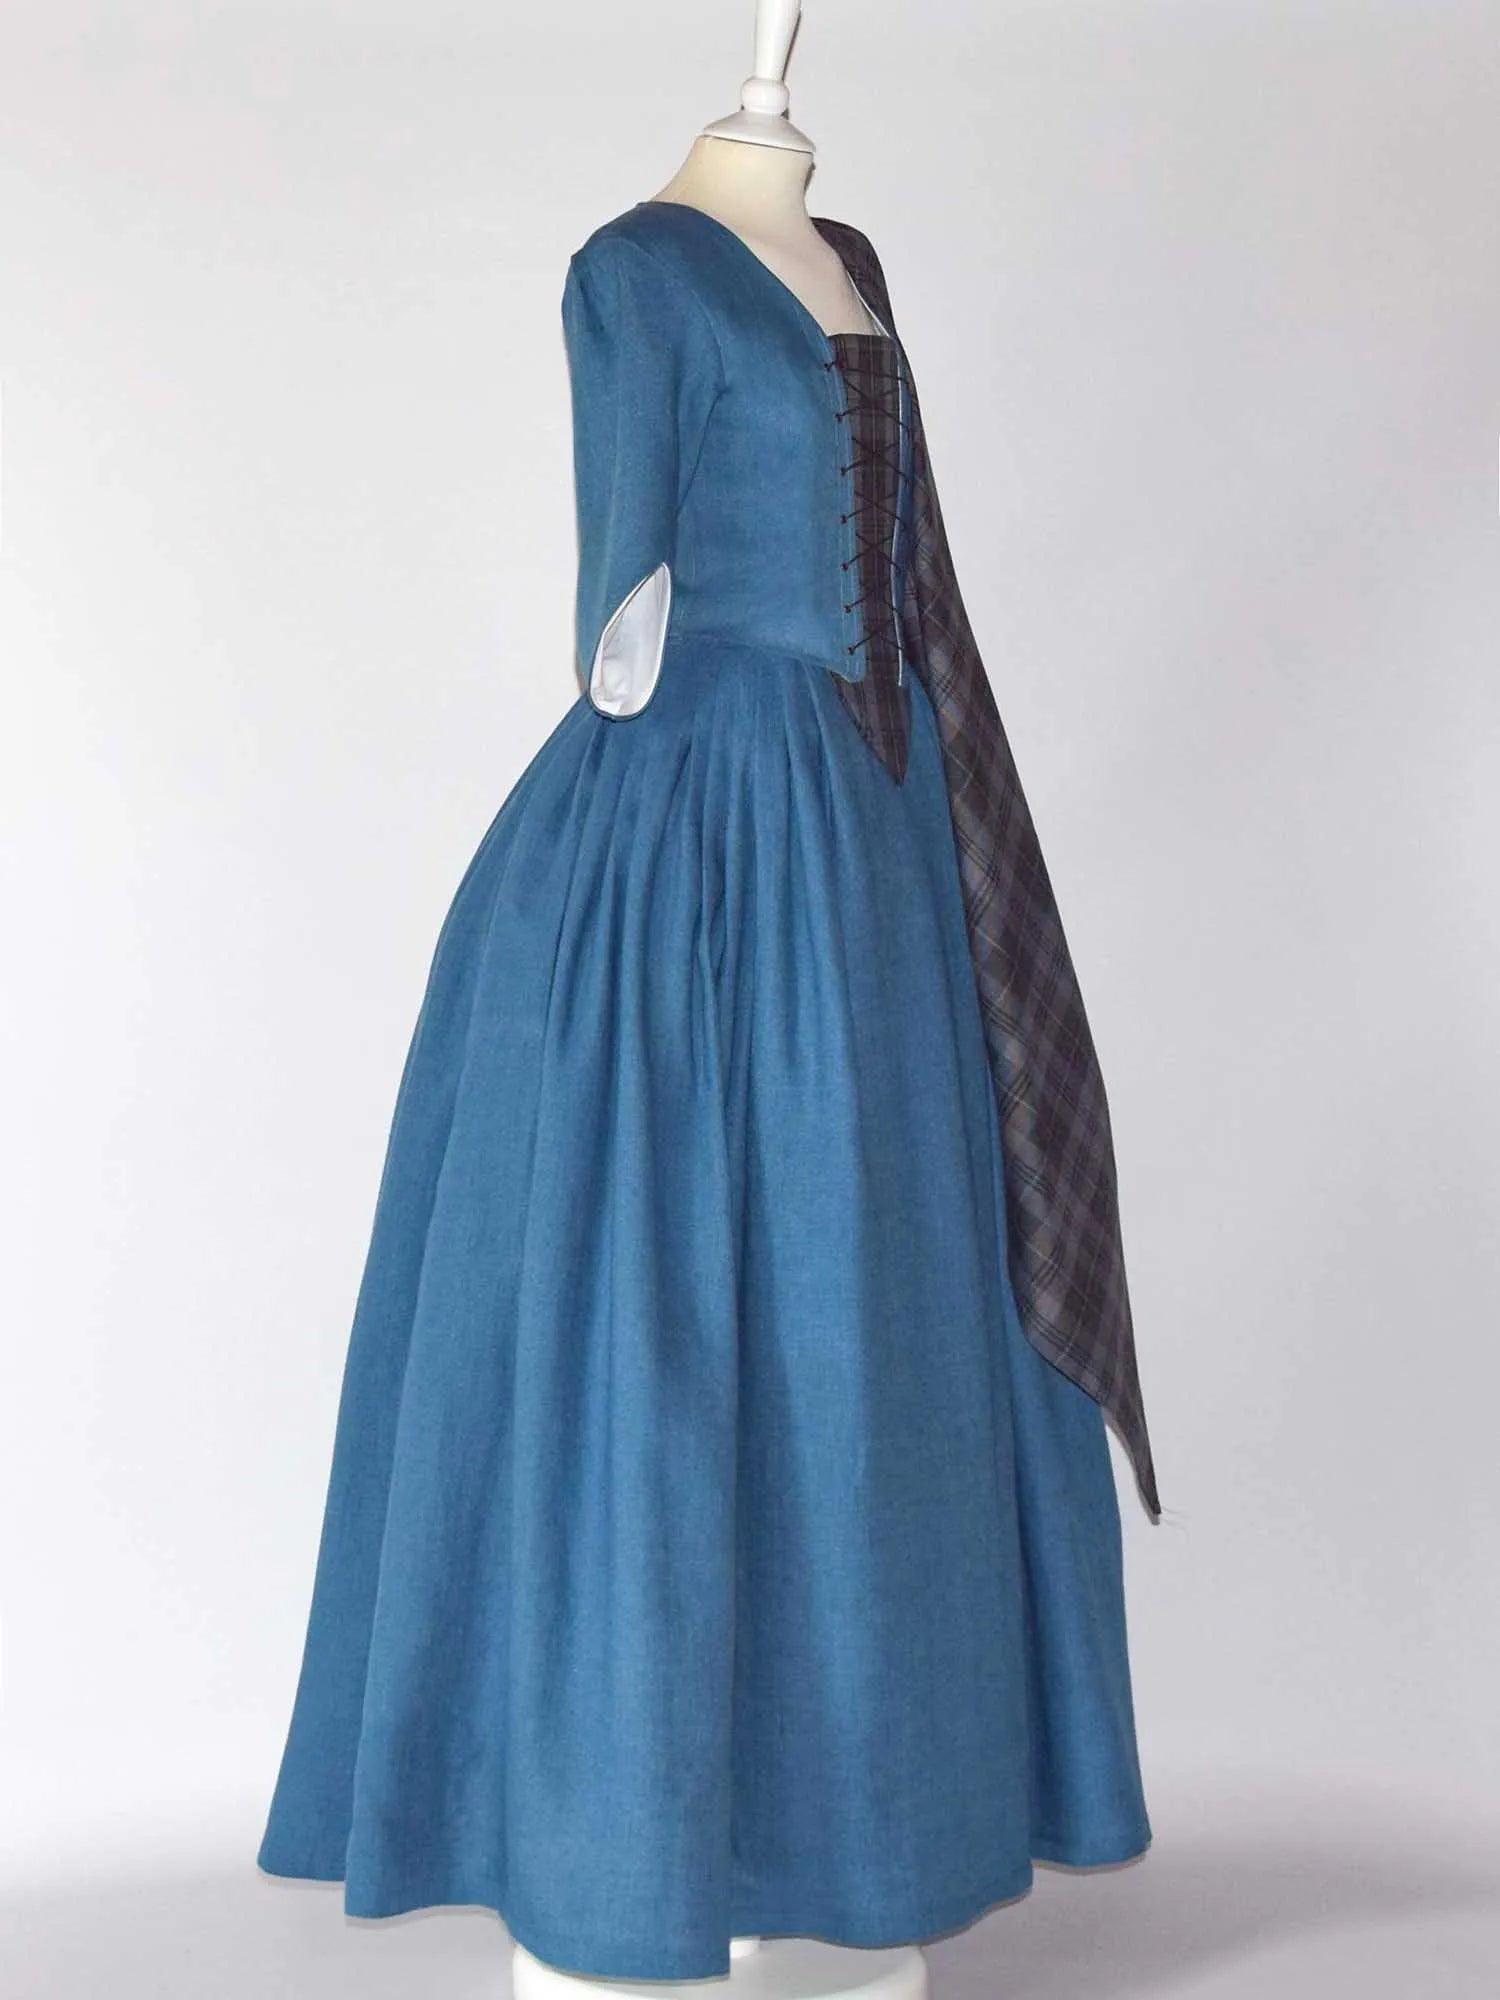 Historical Costume in Steel Blue Linen & Silver Granite Tartan - Atelier Serraspina